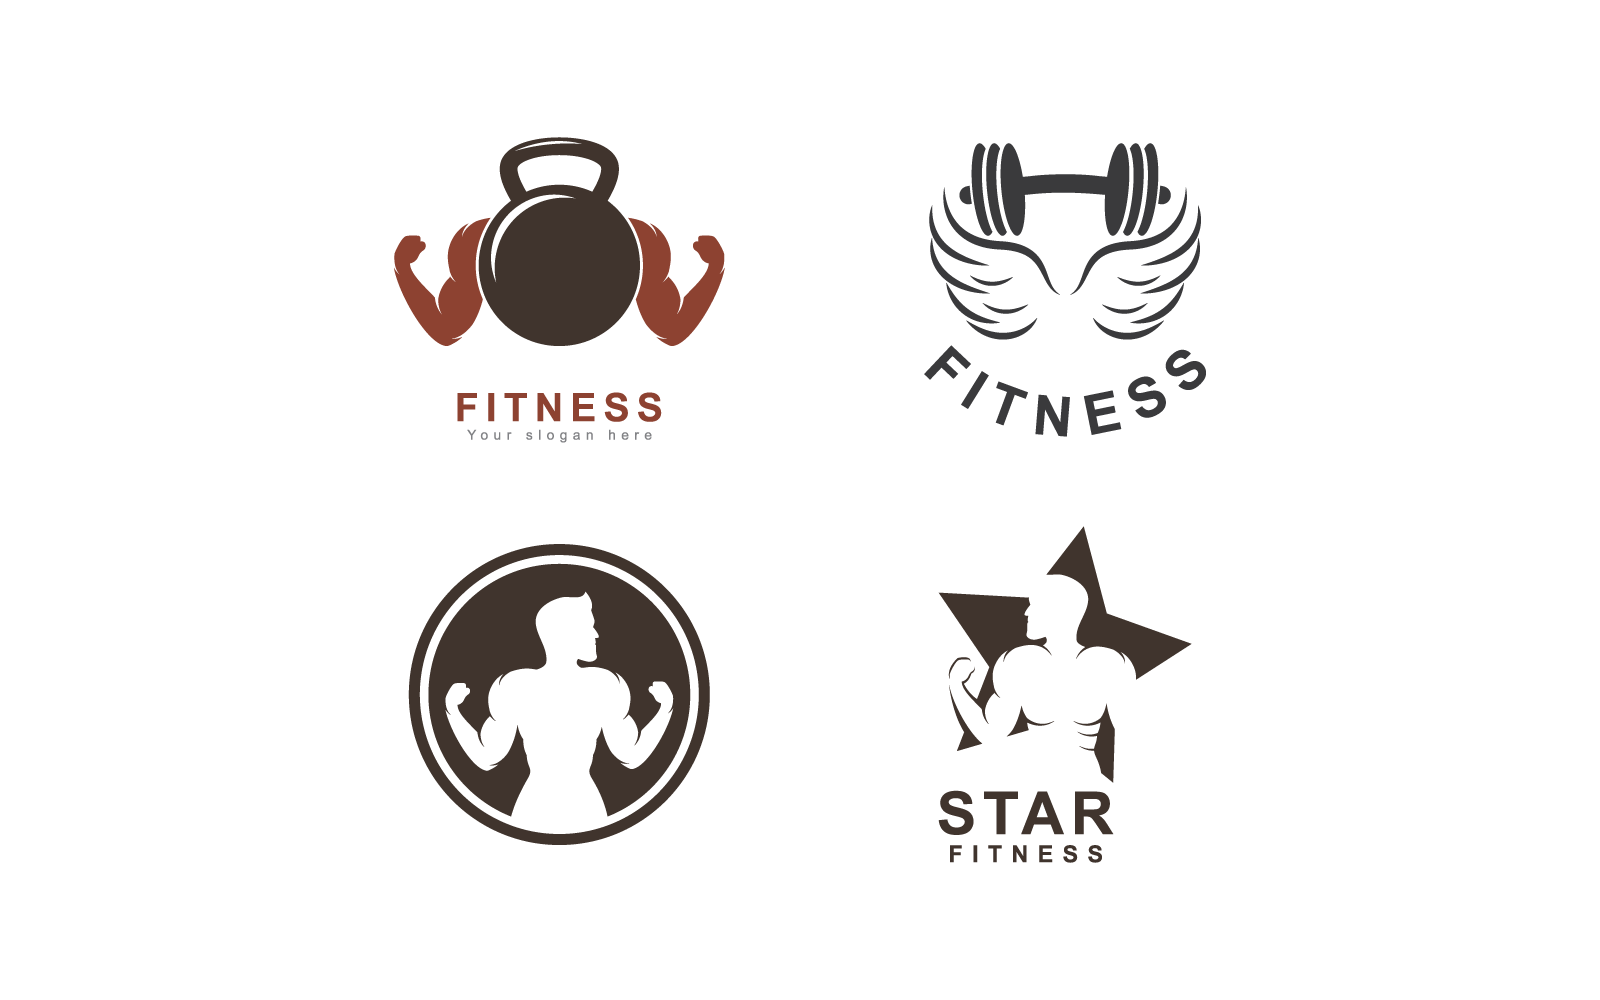 Gym illustration flat design vector logo template